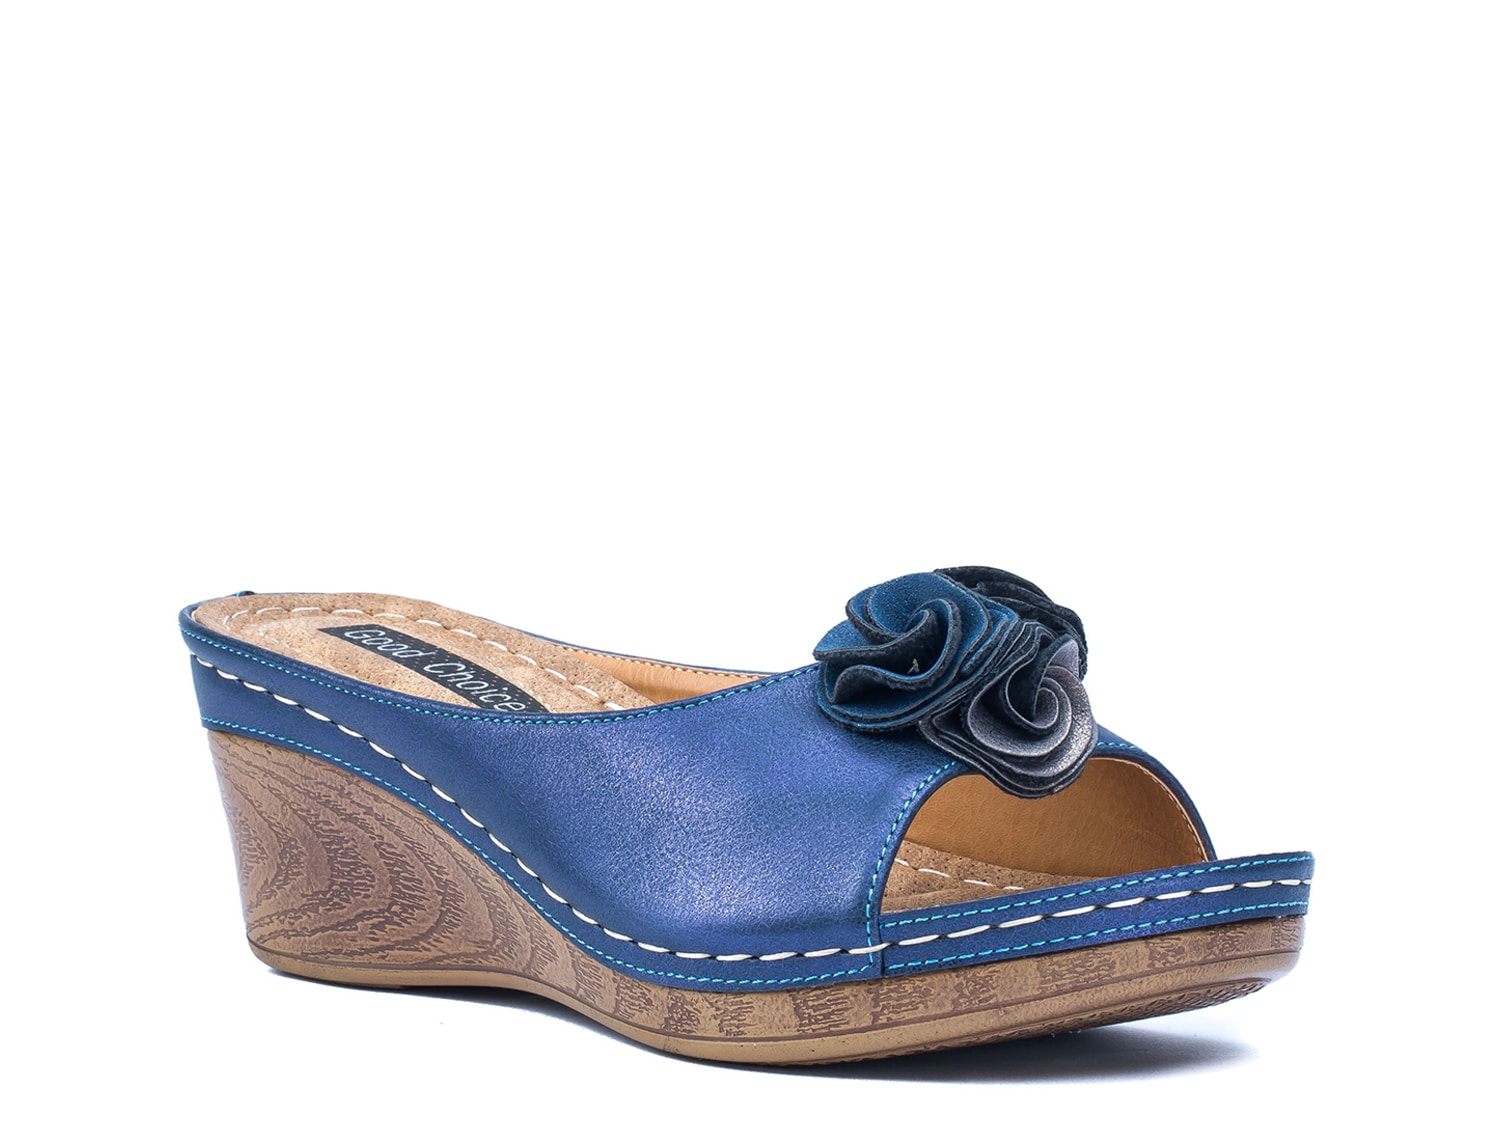 GC Shoes Sydney Wedge Sandal - Free Shipping | DSW